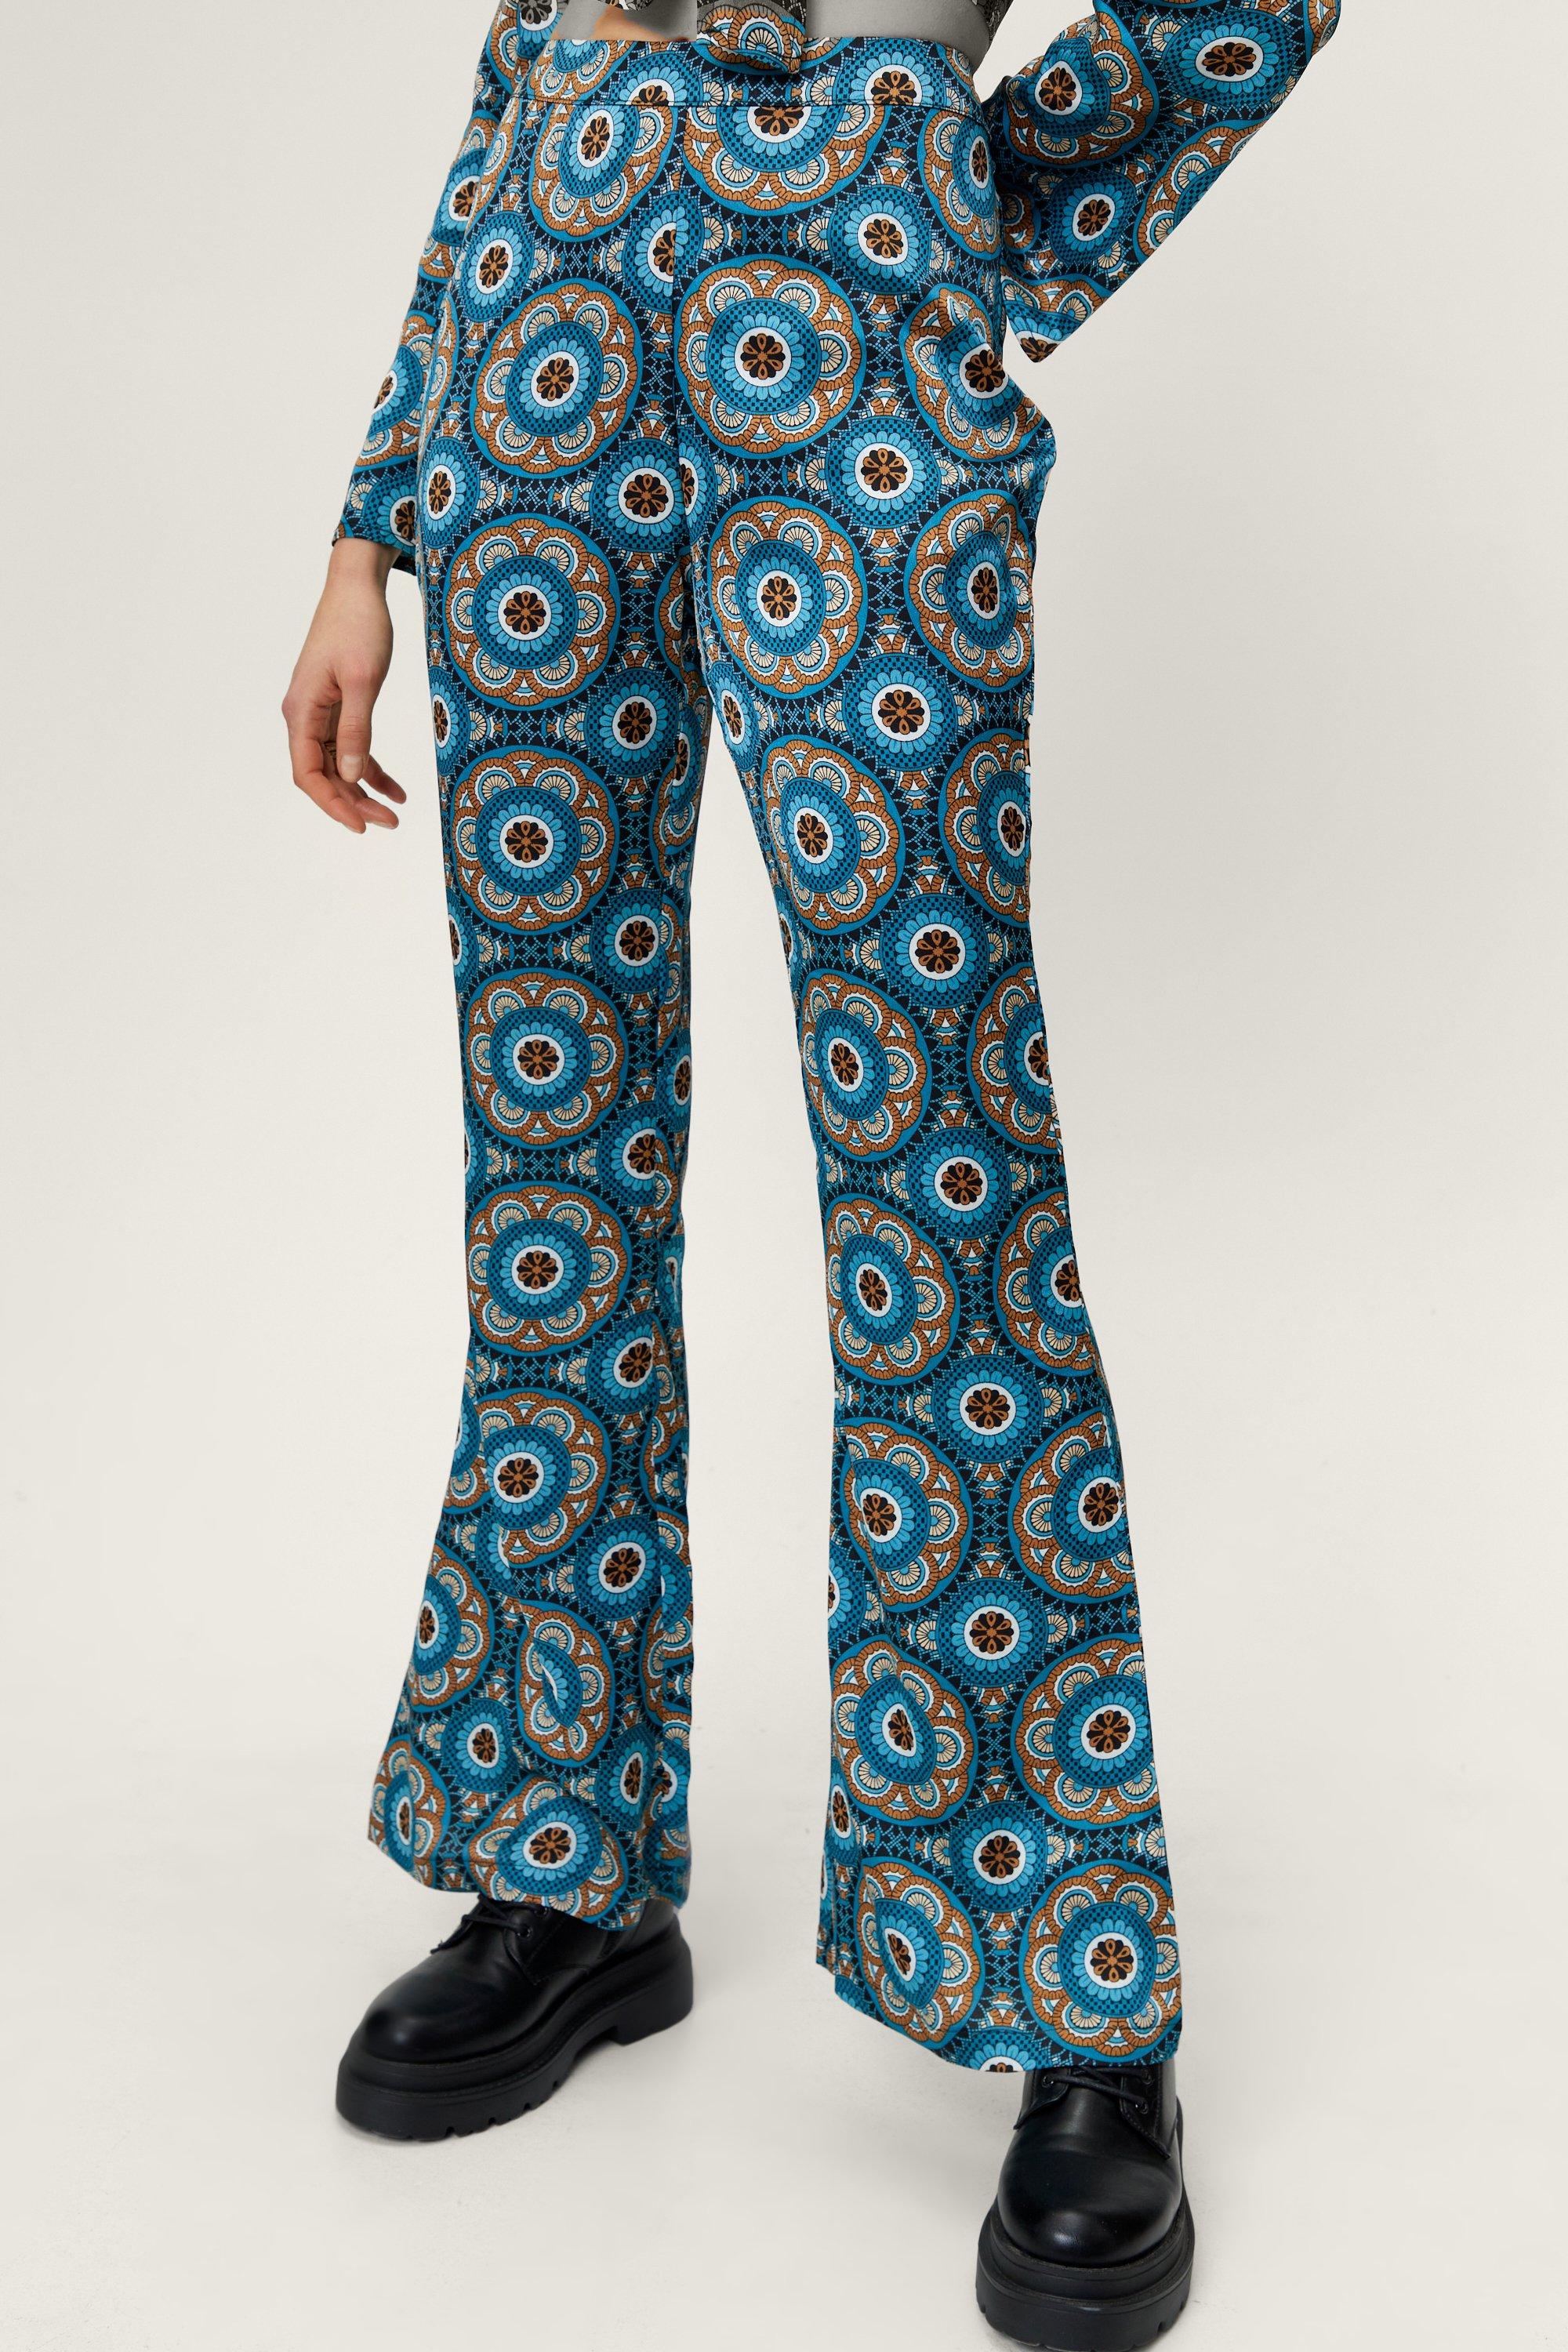 https://media.nastygal.com/i/nastygal/bgg02018_blue_xl_1/blue-retro-print-wide-leg-two-piece-pants